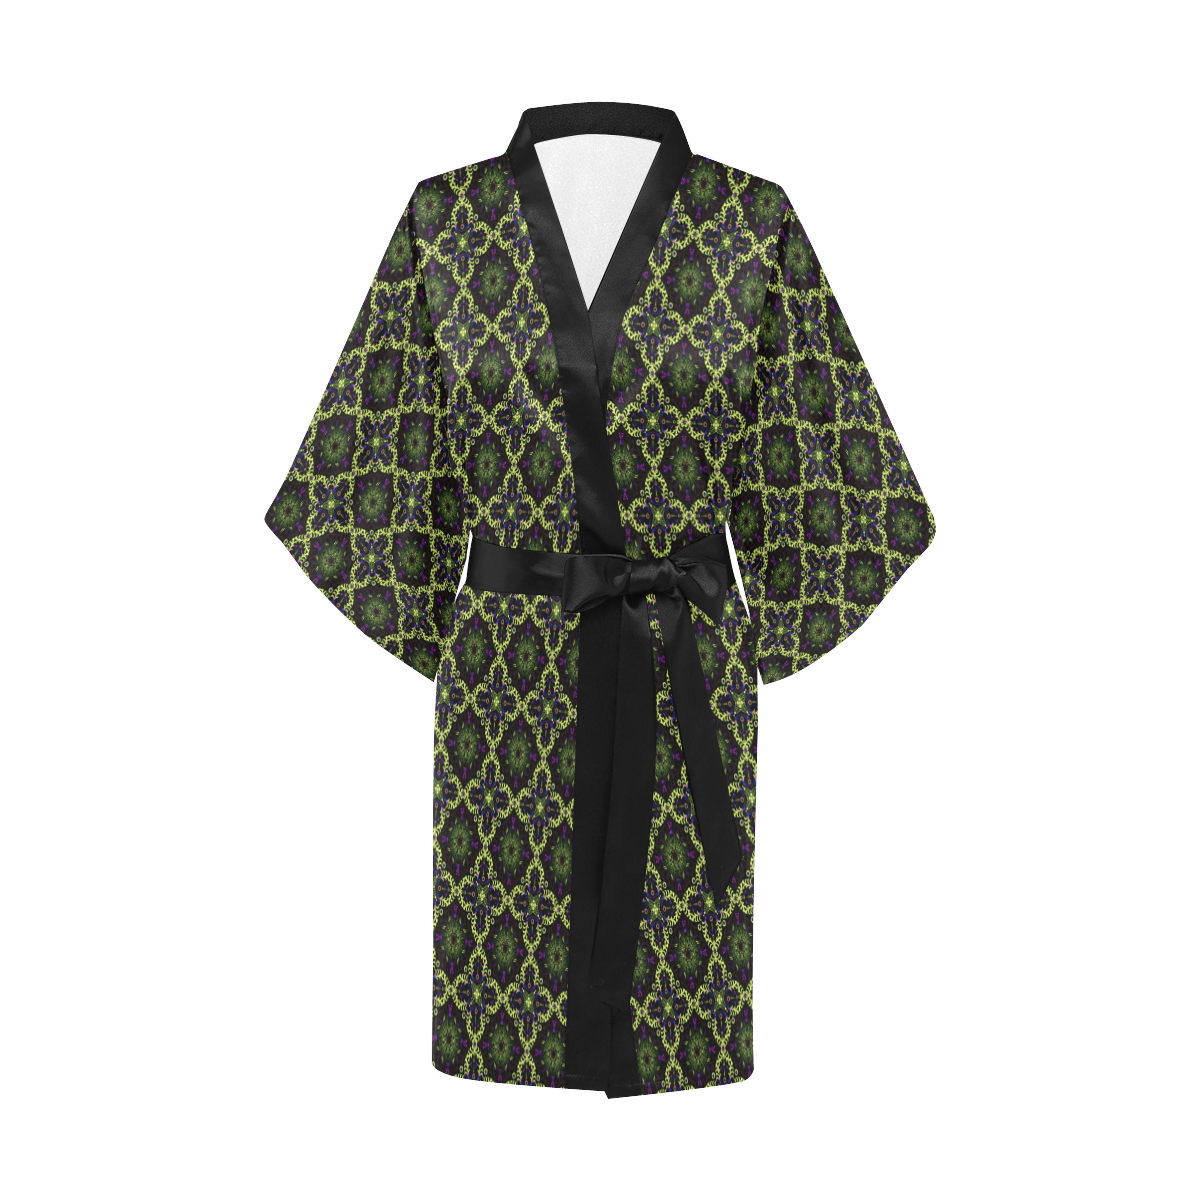 12sym Kimono Robe